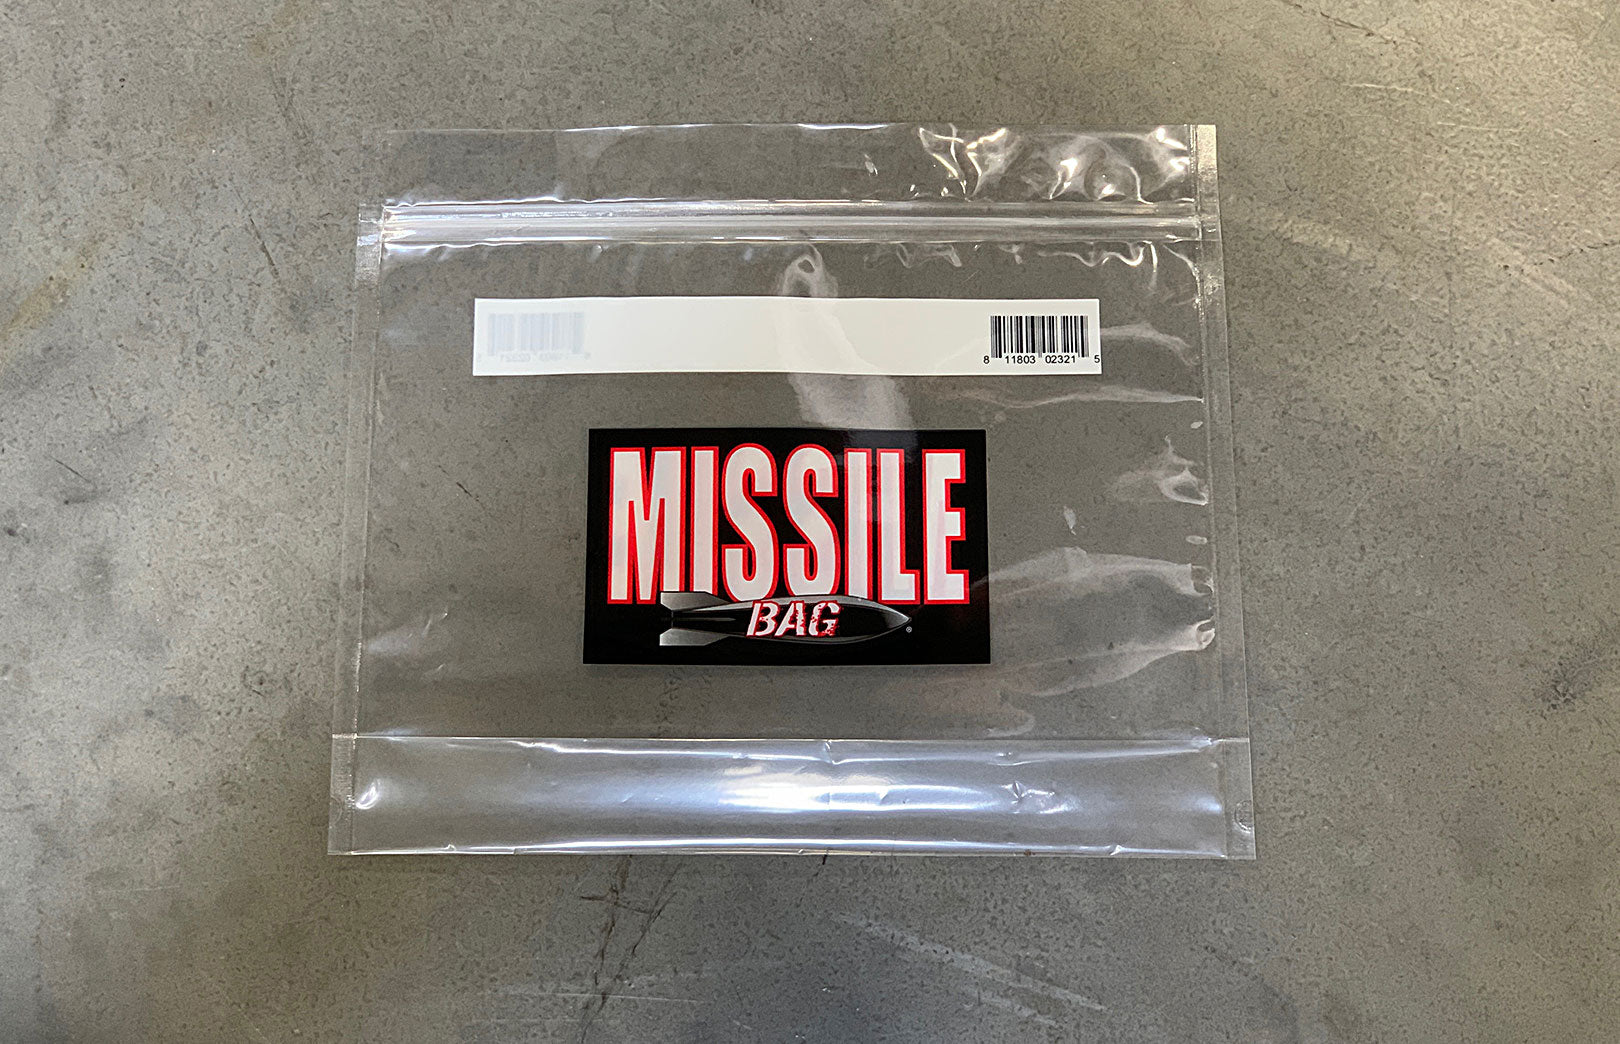 Missile Bag – Missile Baits